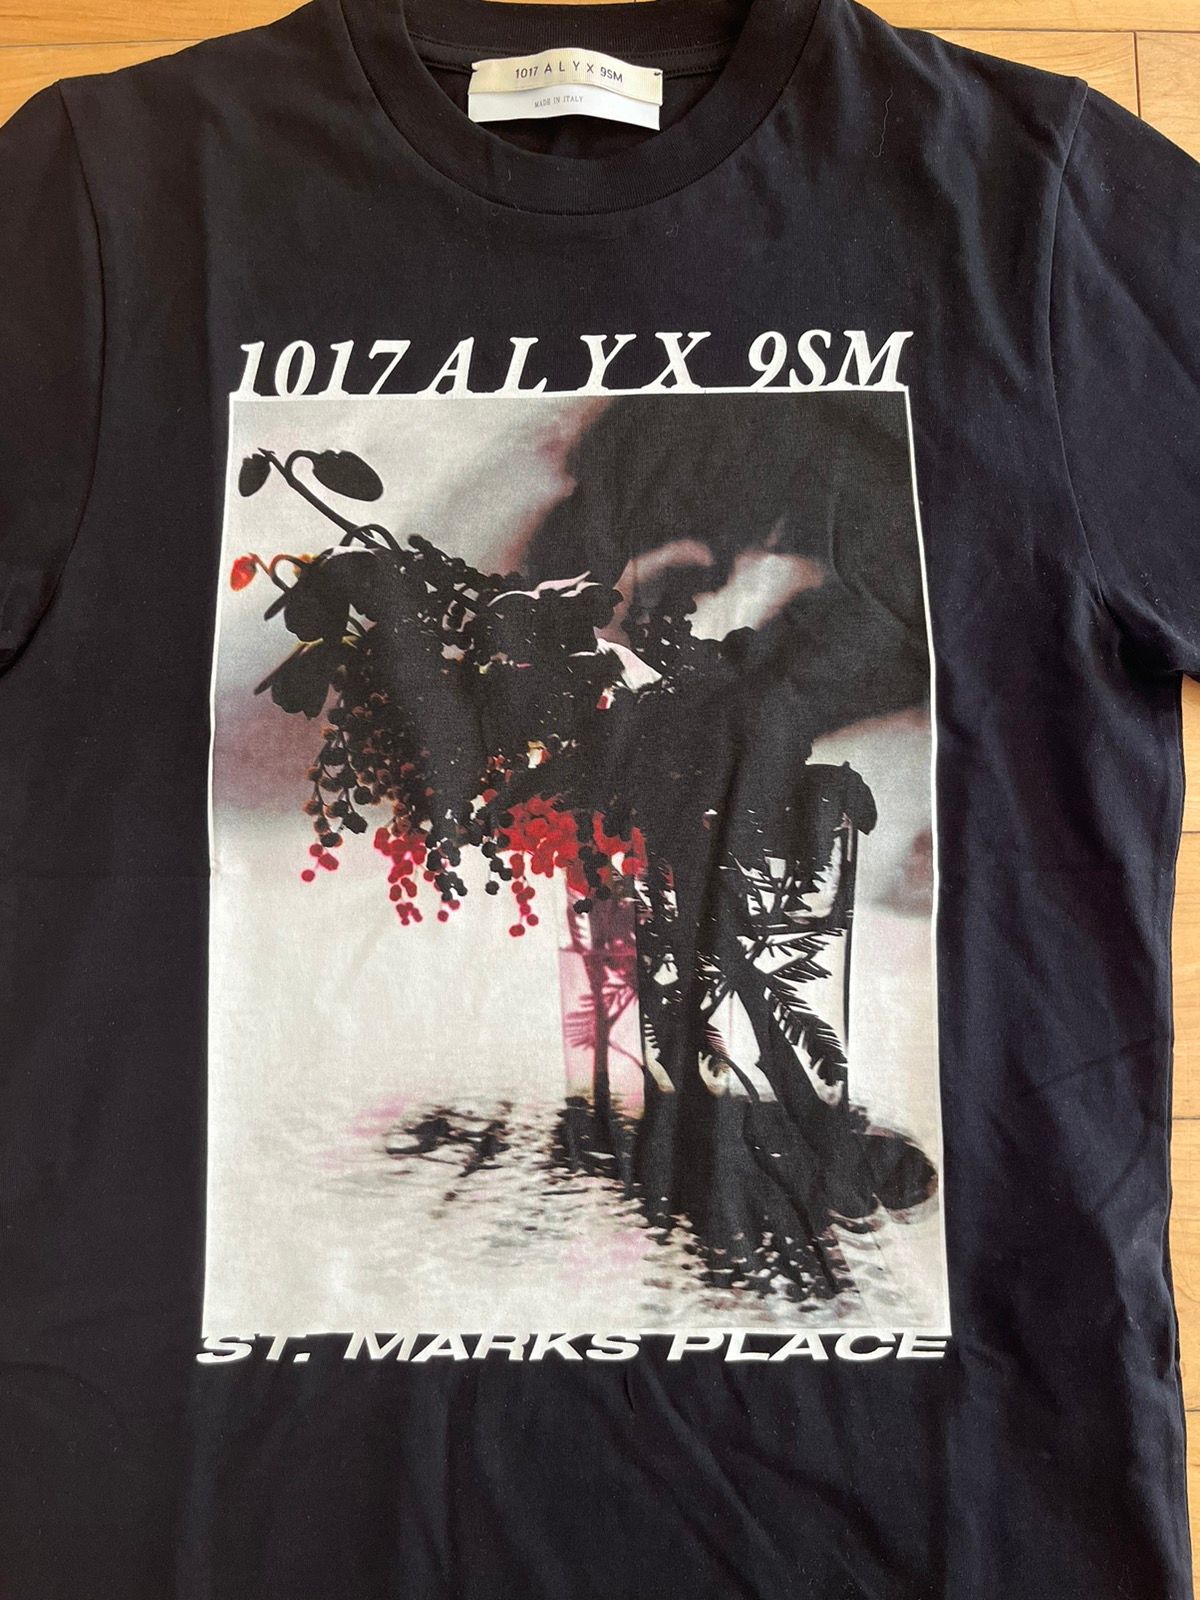 NWT - 1017 ALYX 9SM Flower s/s T-Shirt - 3